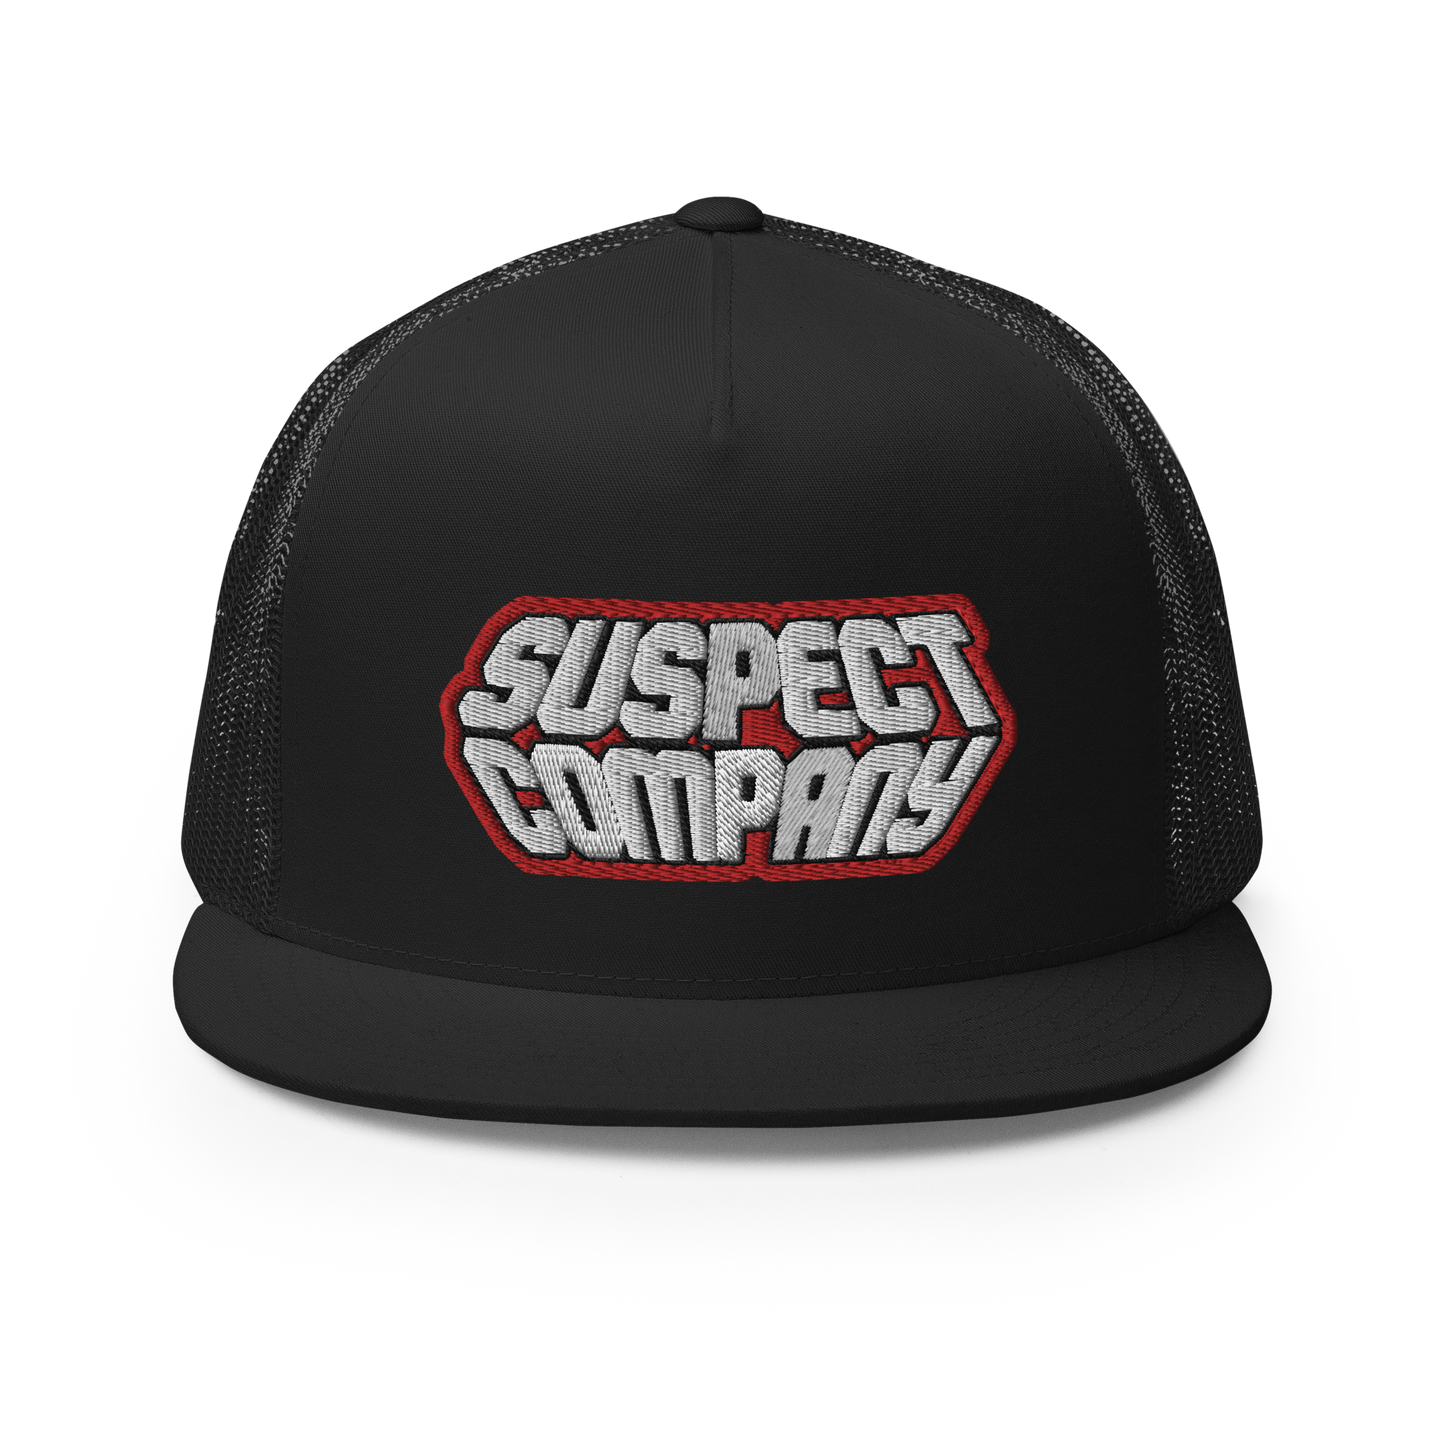 Suspect Company Snap-back